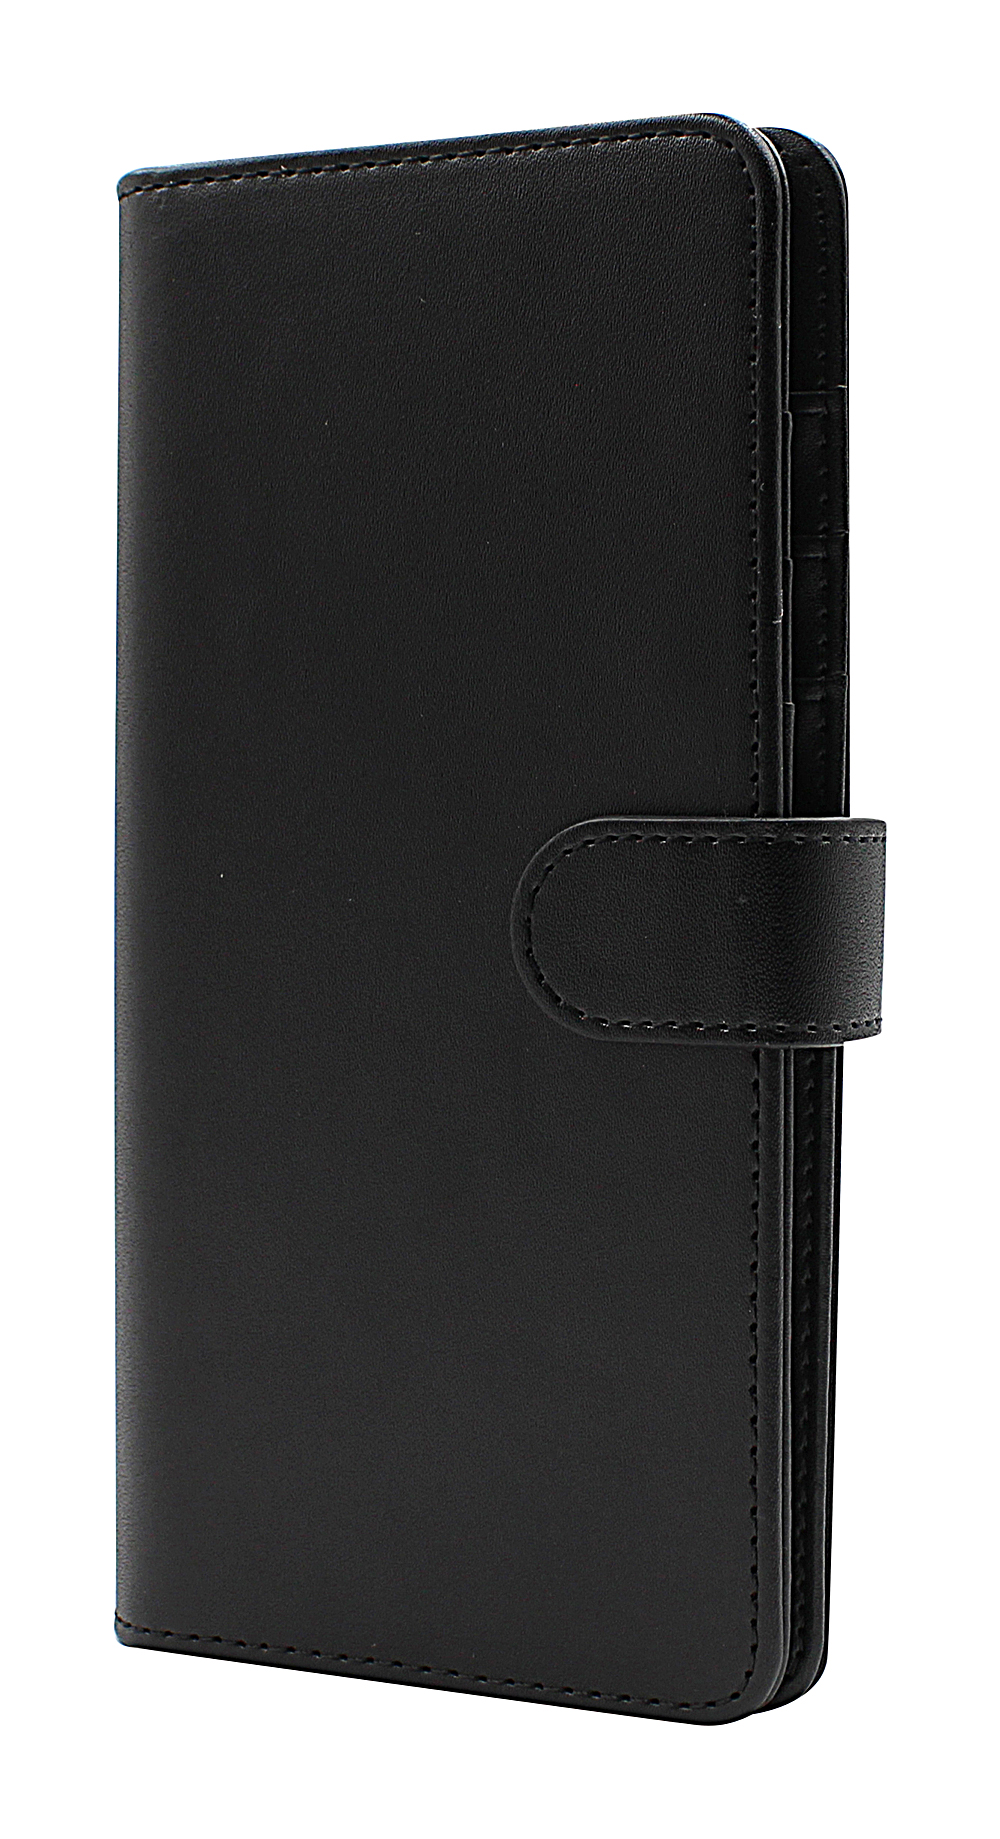 Skimblocker XL Magnet Wallet Motorola Moto G9 Play